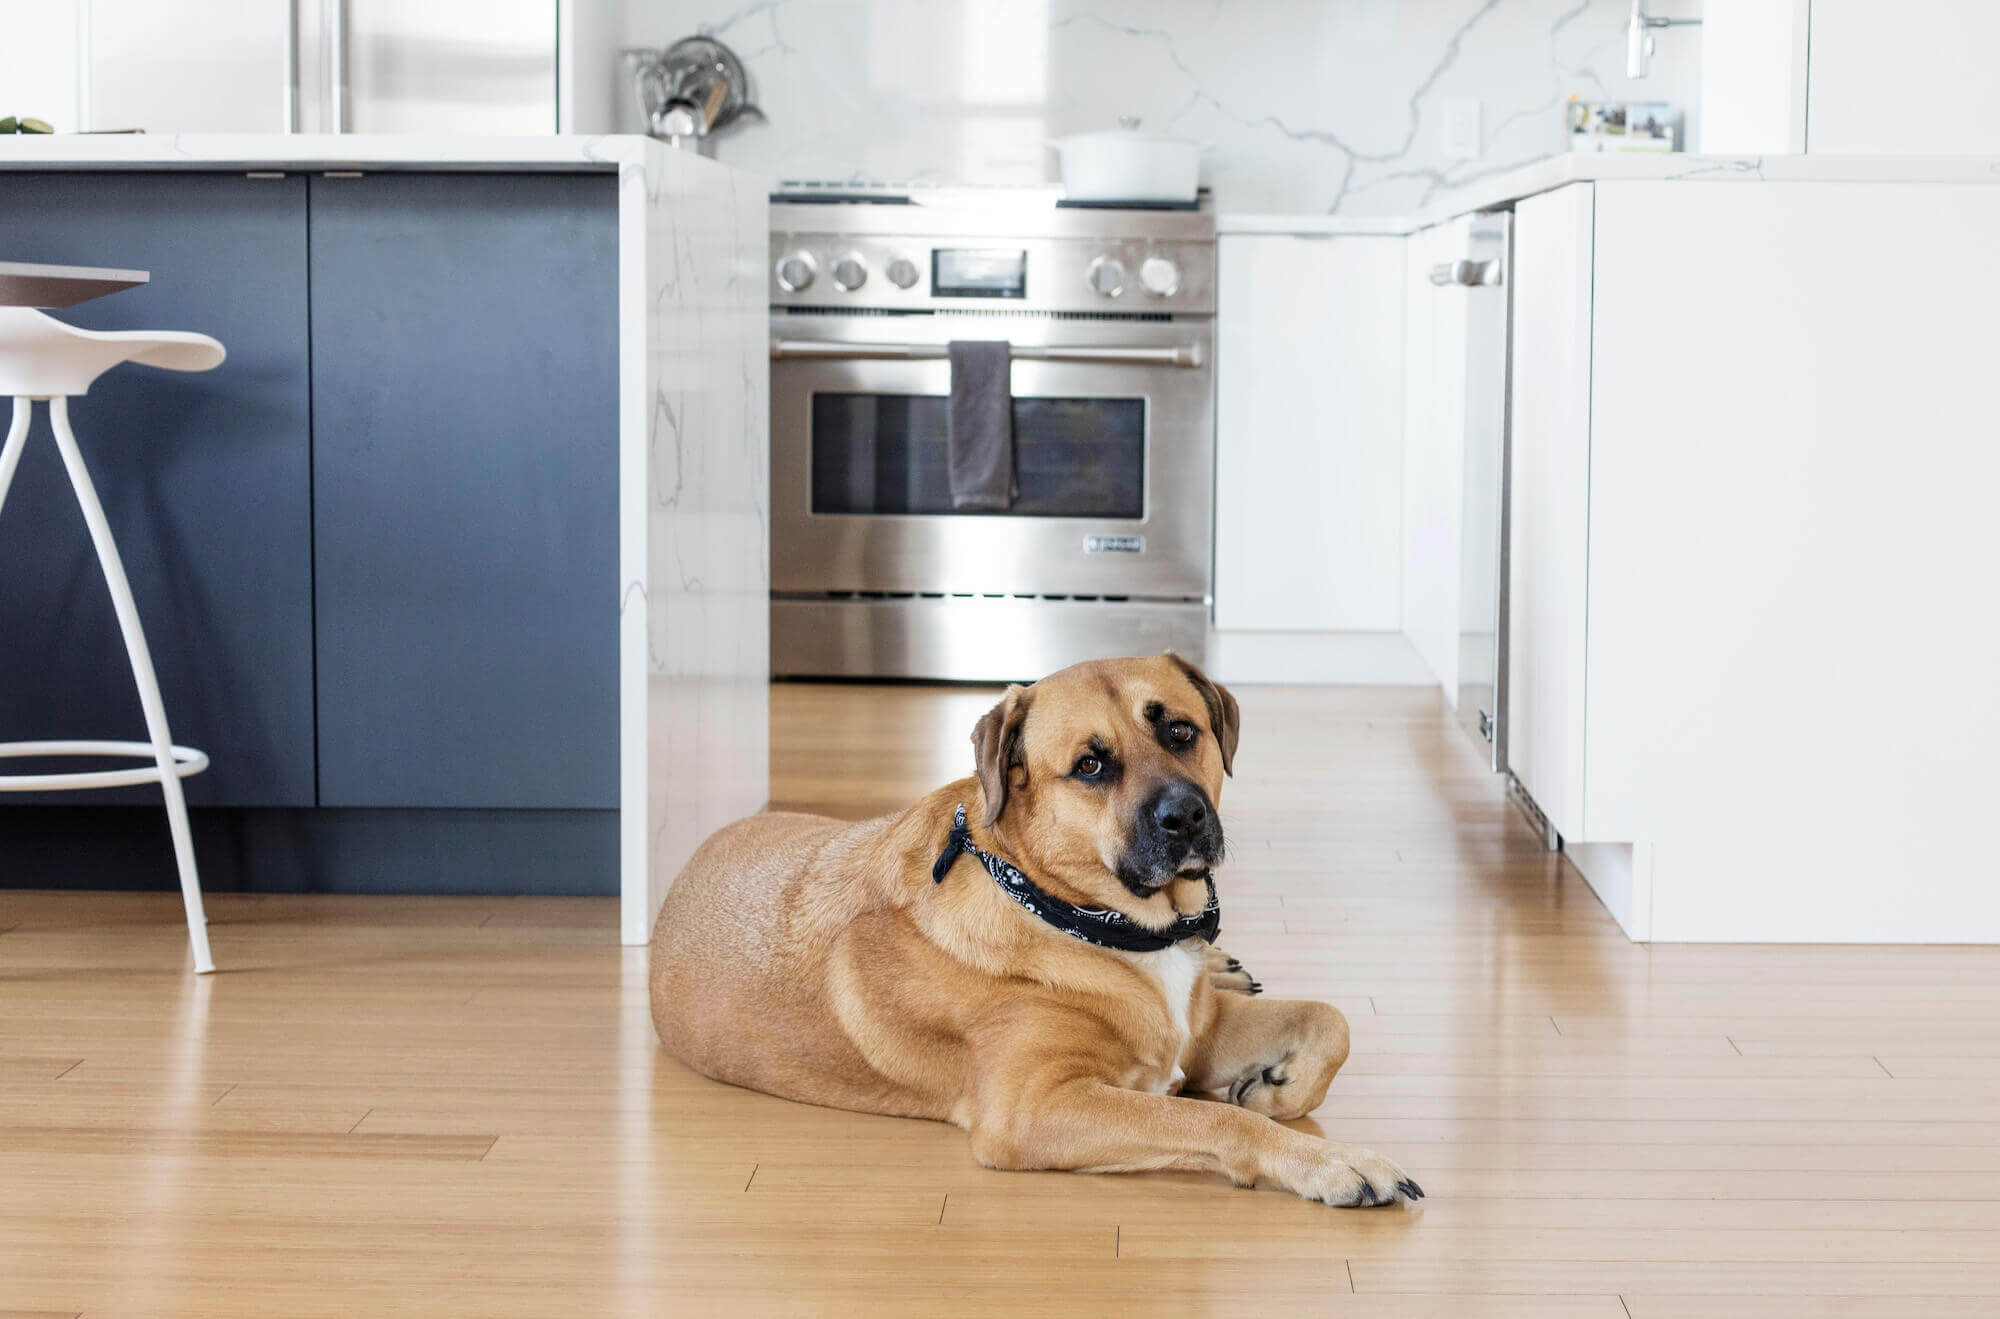 Dog in remodeled kitchen